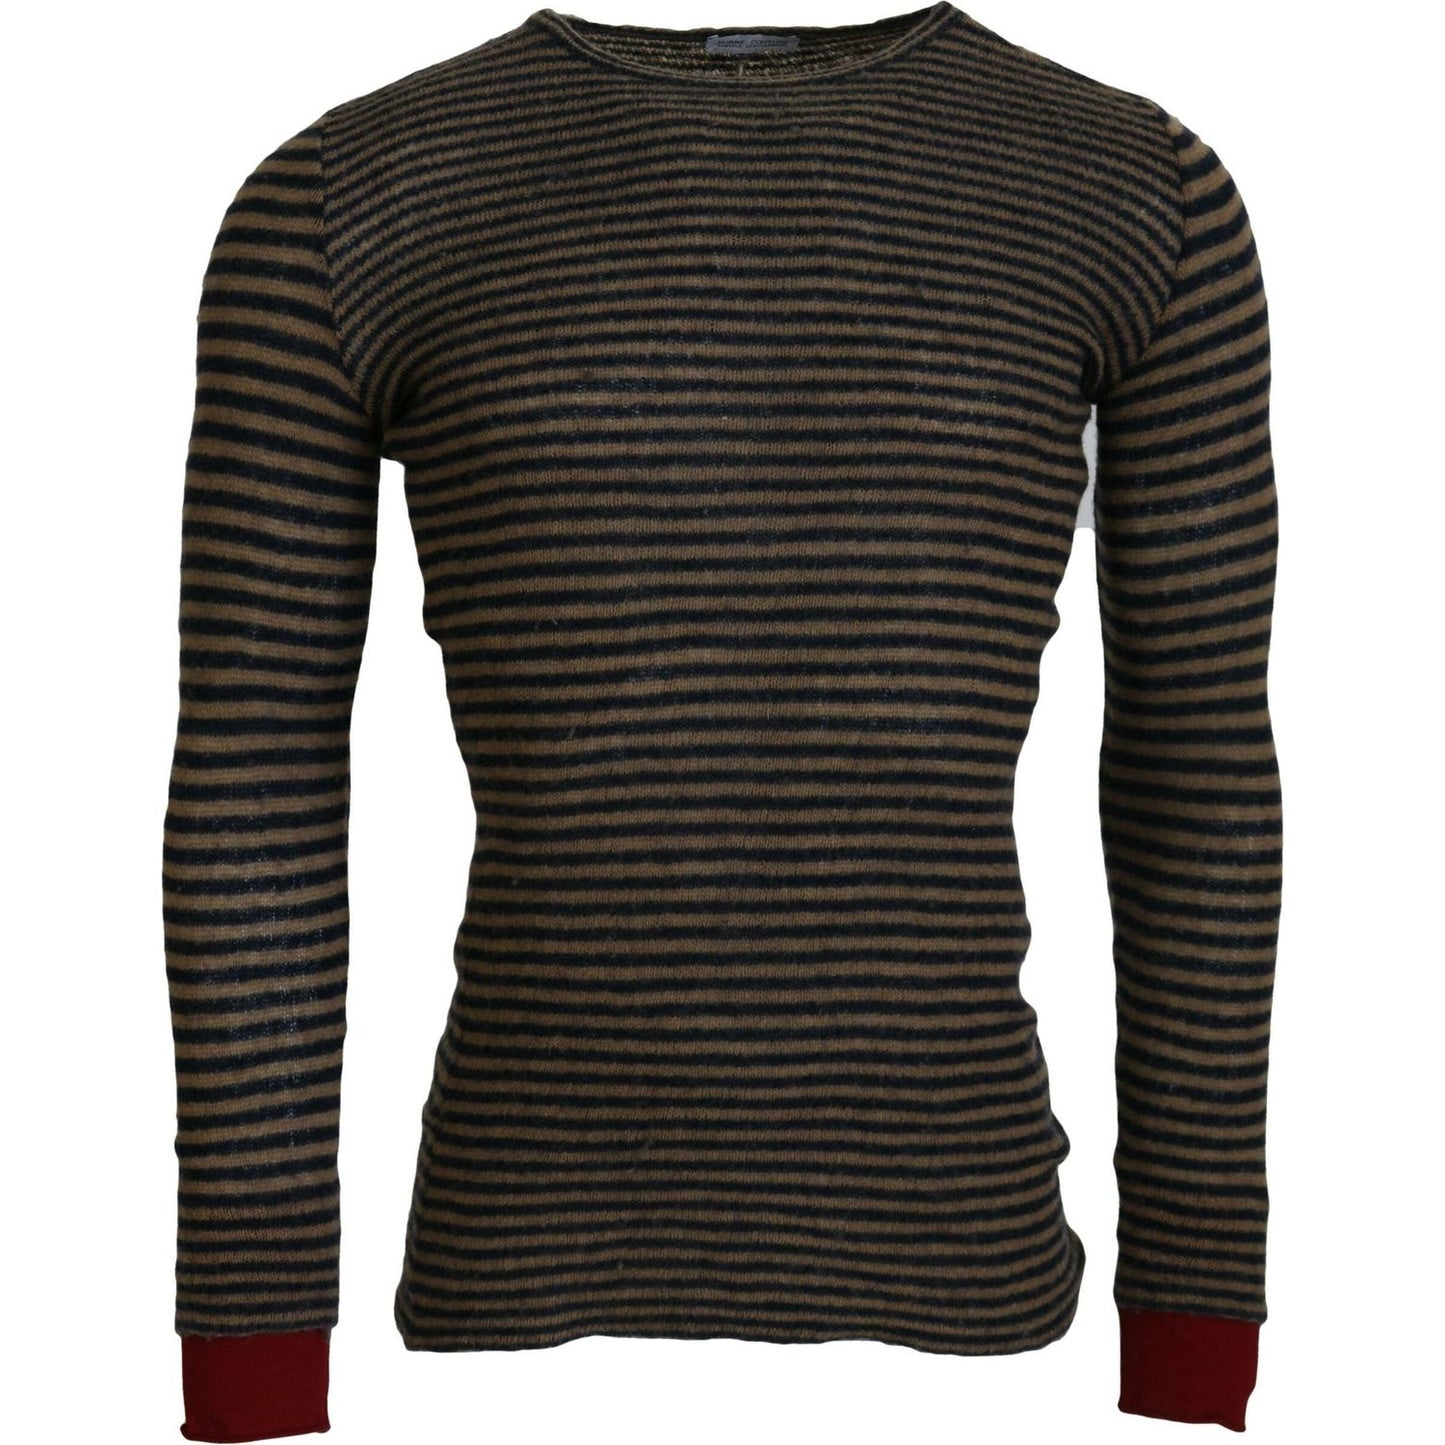 Daniele Alessandrini Chic Black and Brown Crewneck Pullover Sweater multicolor-stripes-wool-crewneck-pullover-sweater IMG_0679-scaled-1db9398c-916.jpg